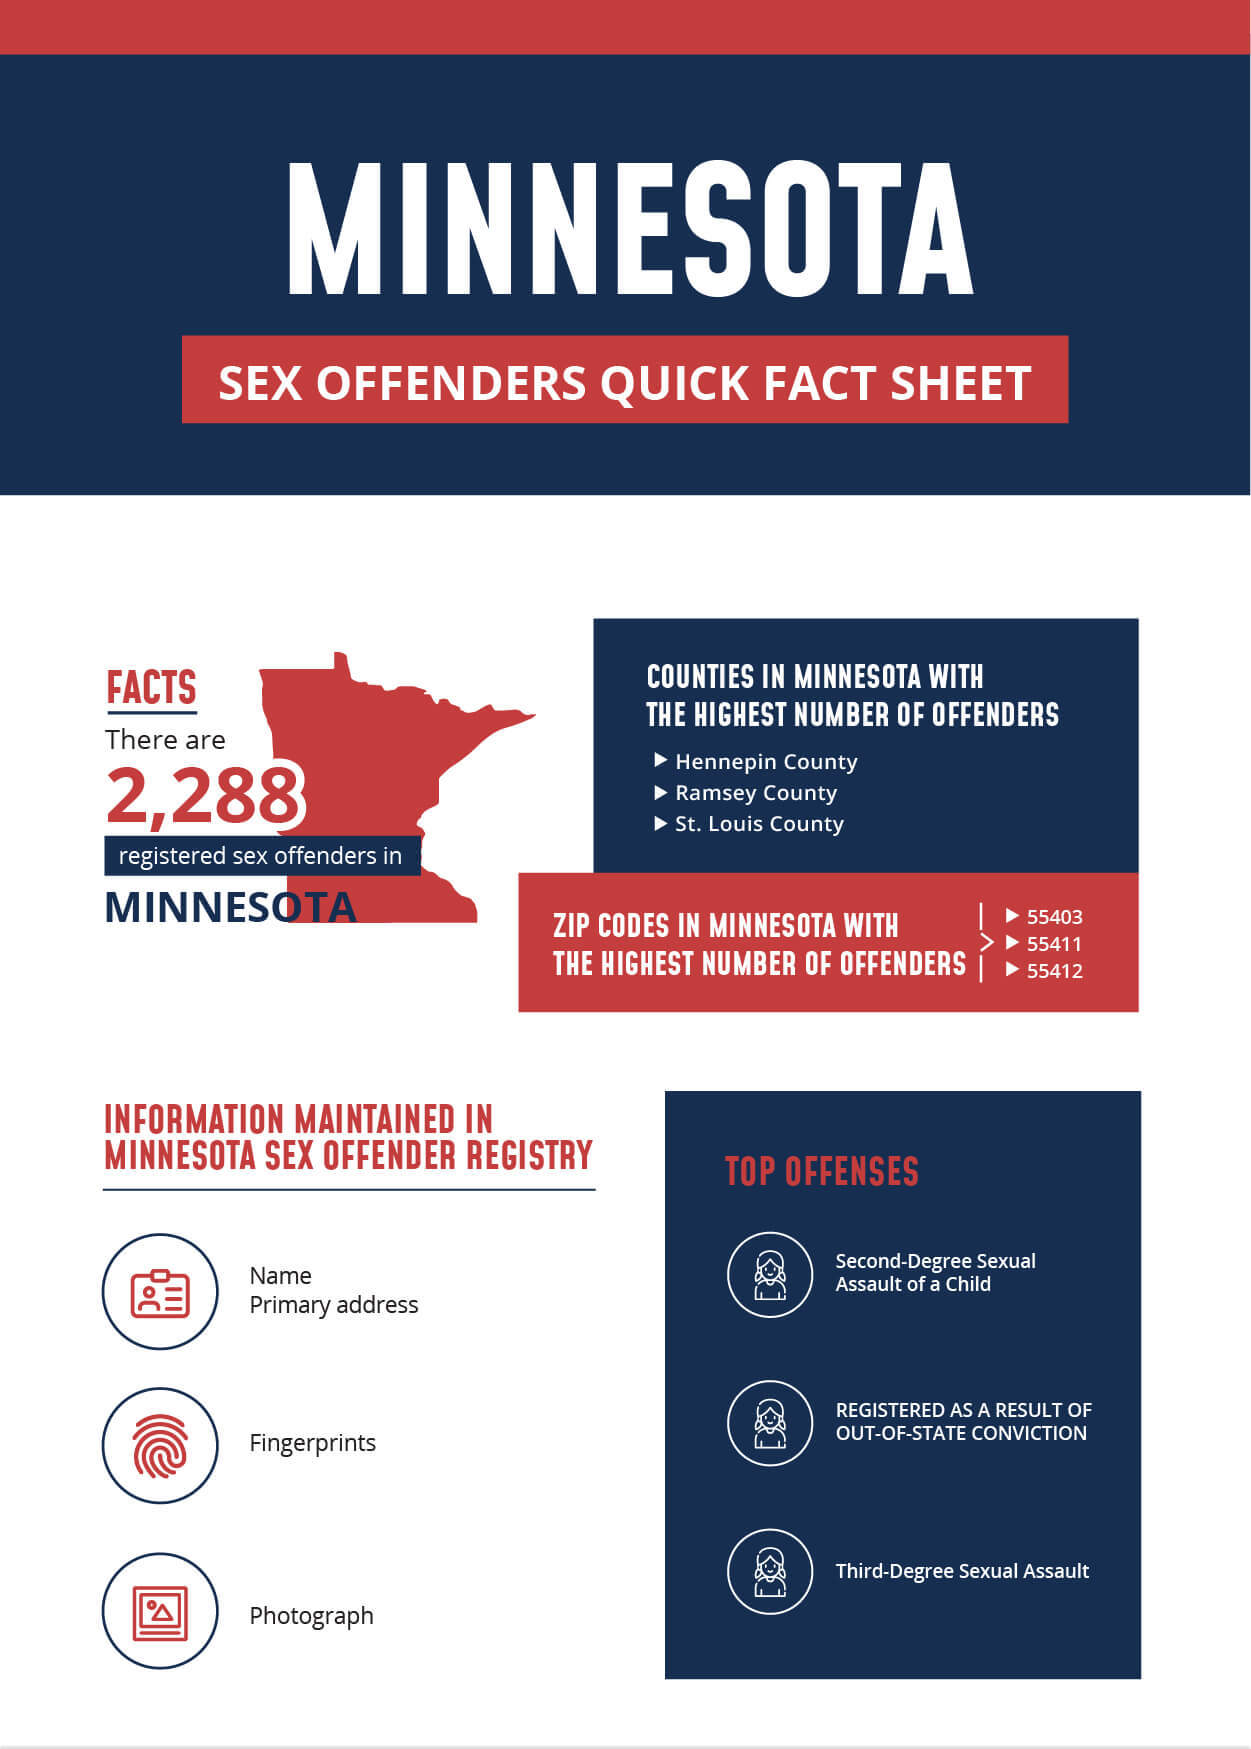 Minnesota-Sex-Offenders-Quick-Fact-Sheet-Infographic-Thumb.jpeg